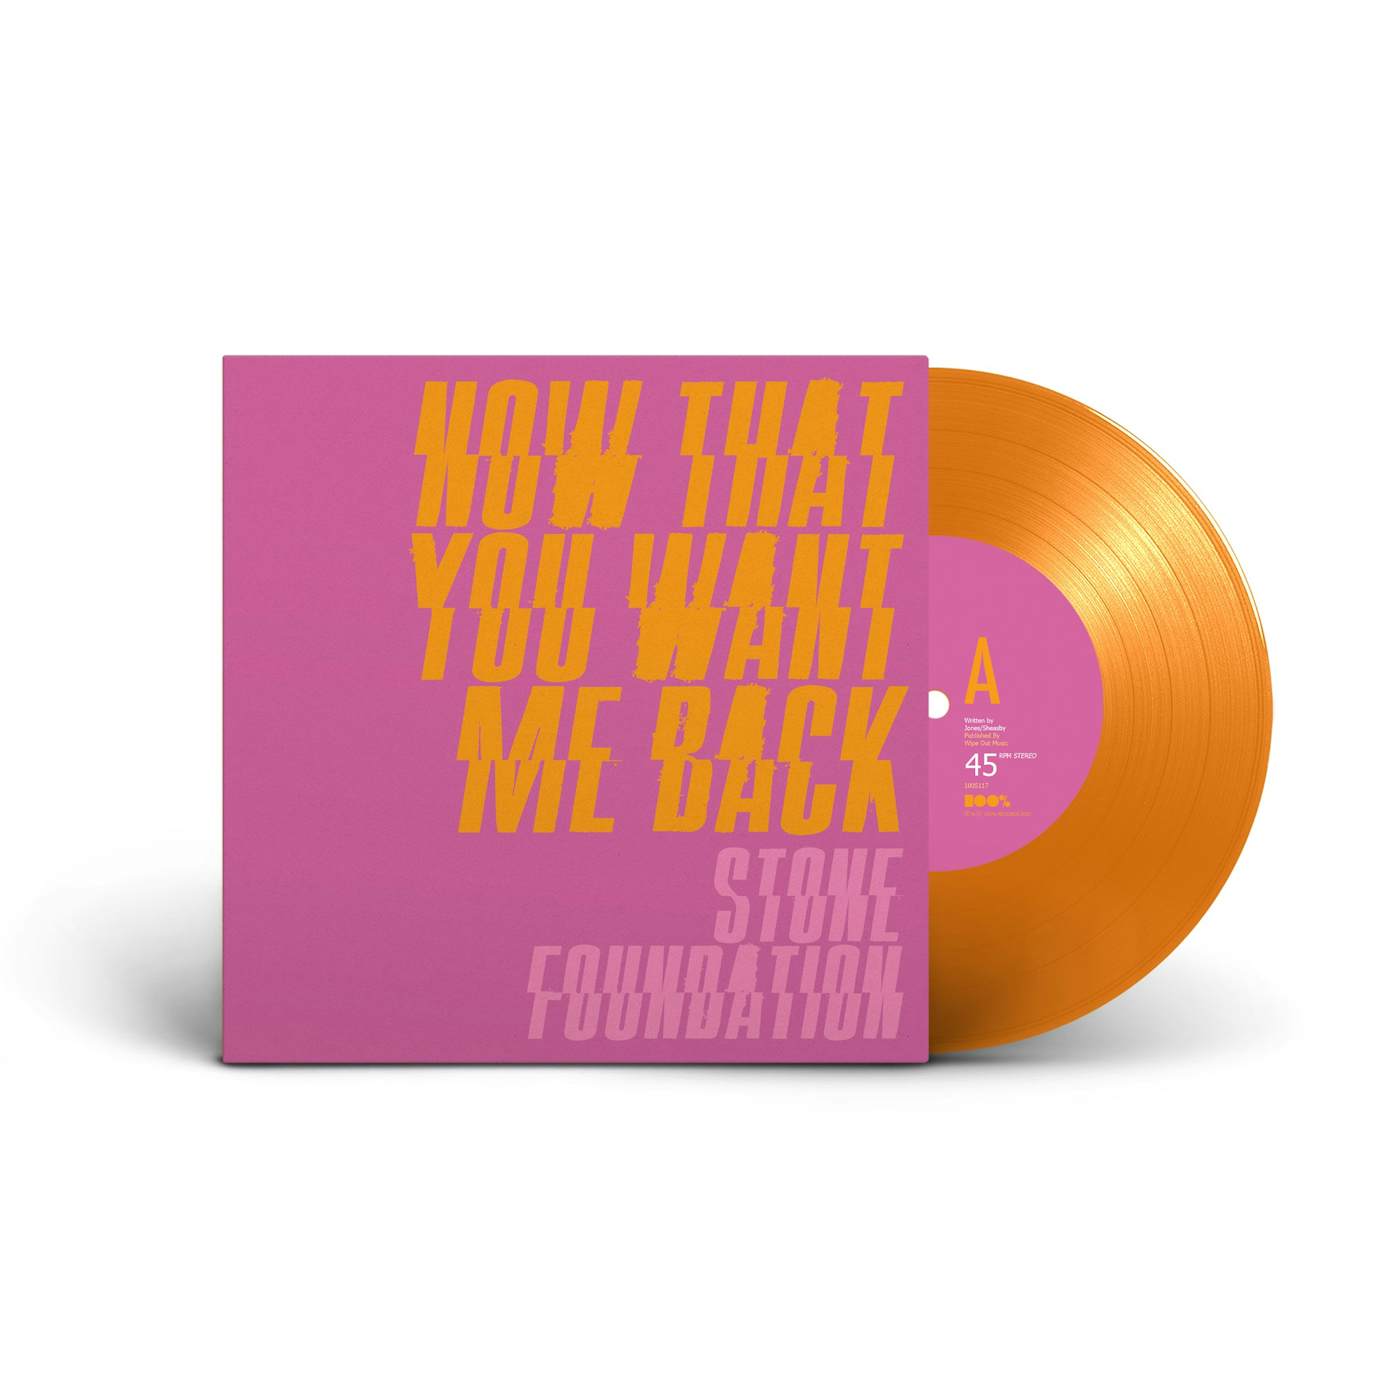 Stone Foundation Now That You Want Me Back [feat. Melba Moore] (7" Orange Vinyl)